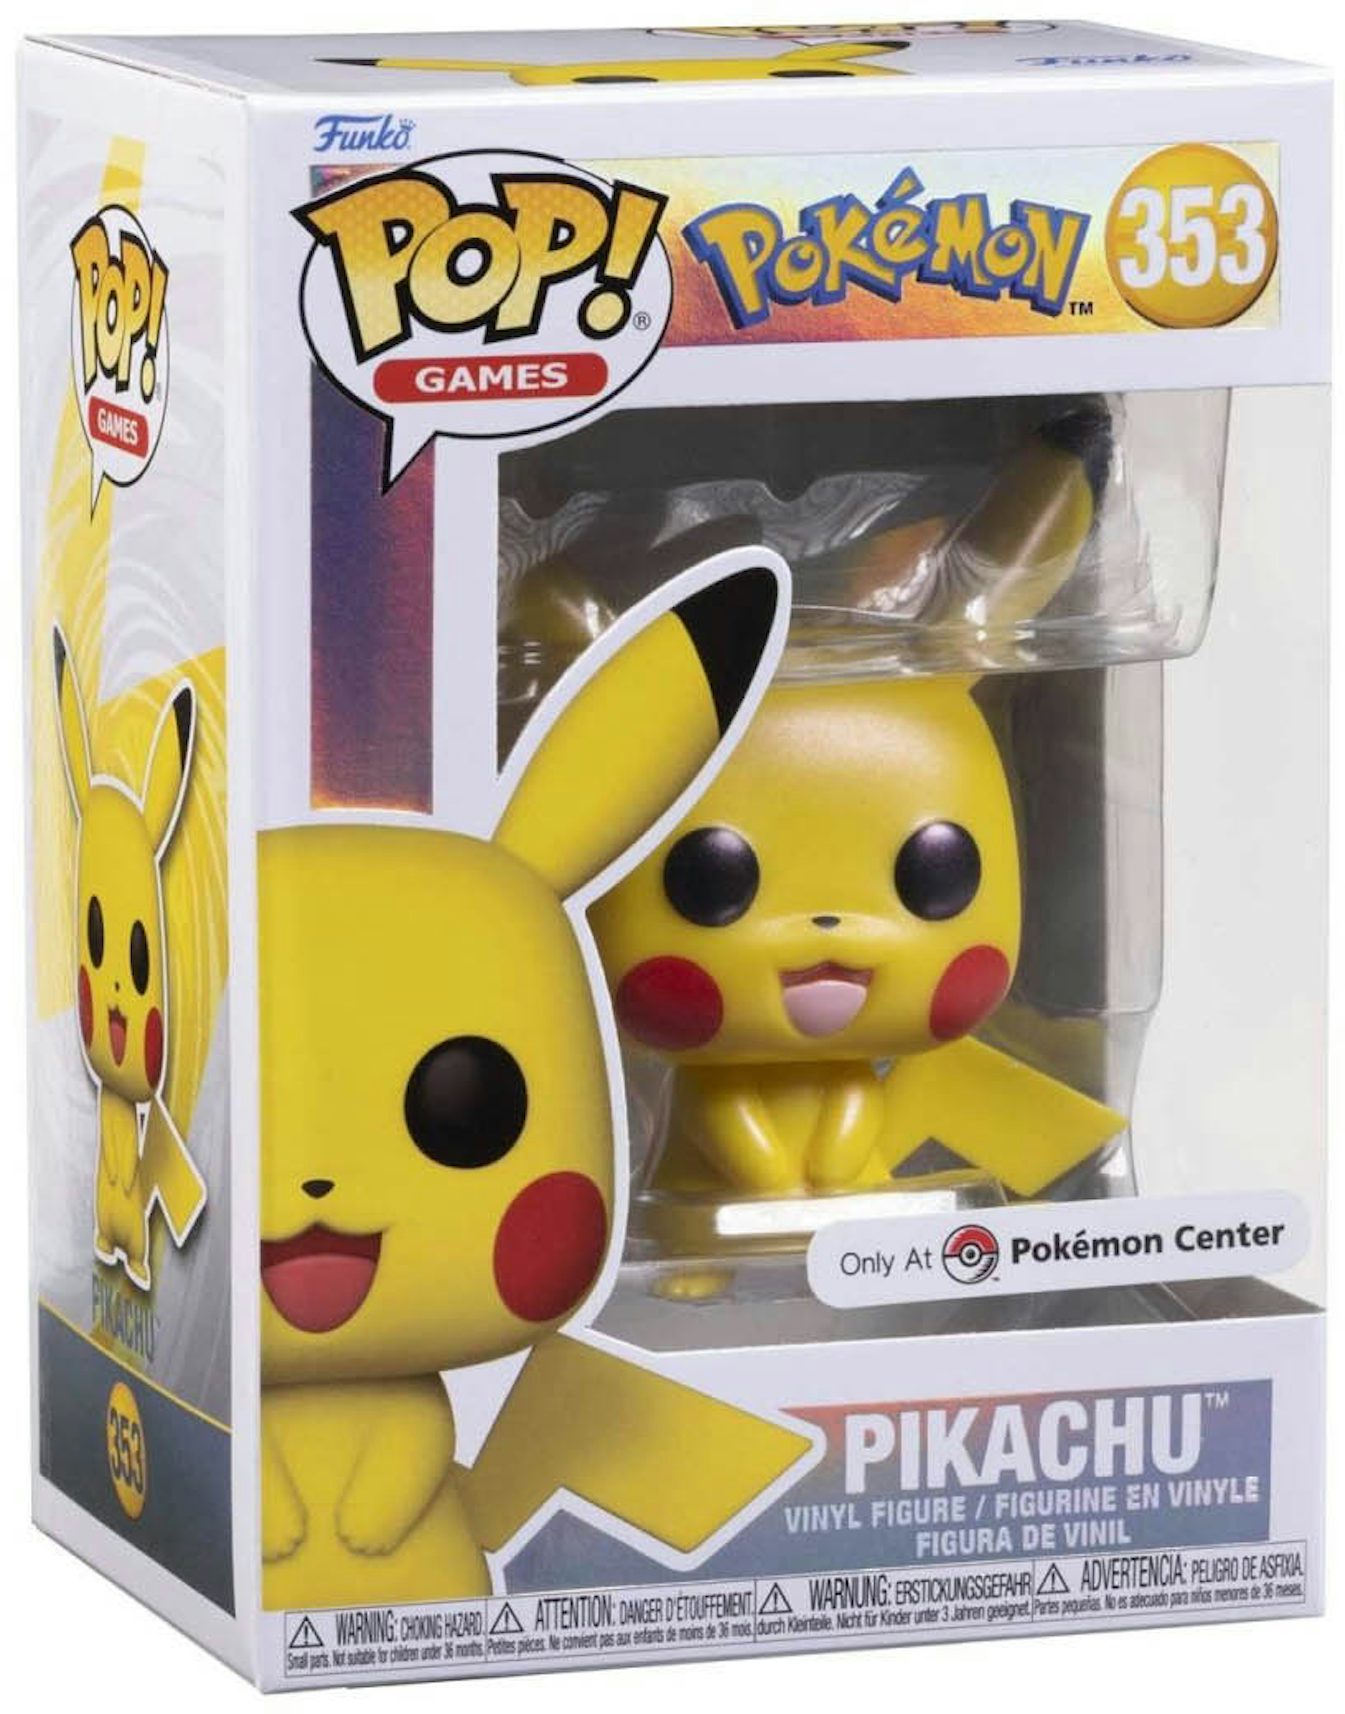 Funko Pop! Pokemon Pikachu 353 - Special Edition Games + Pop